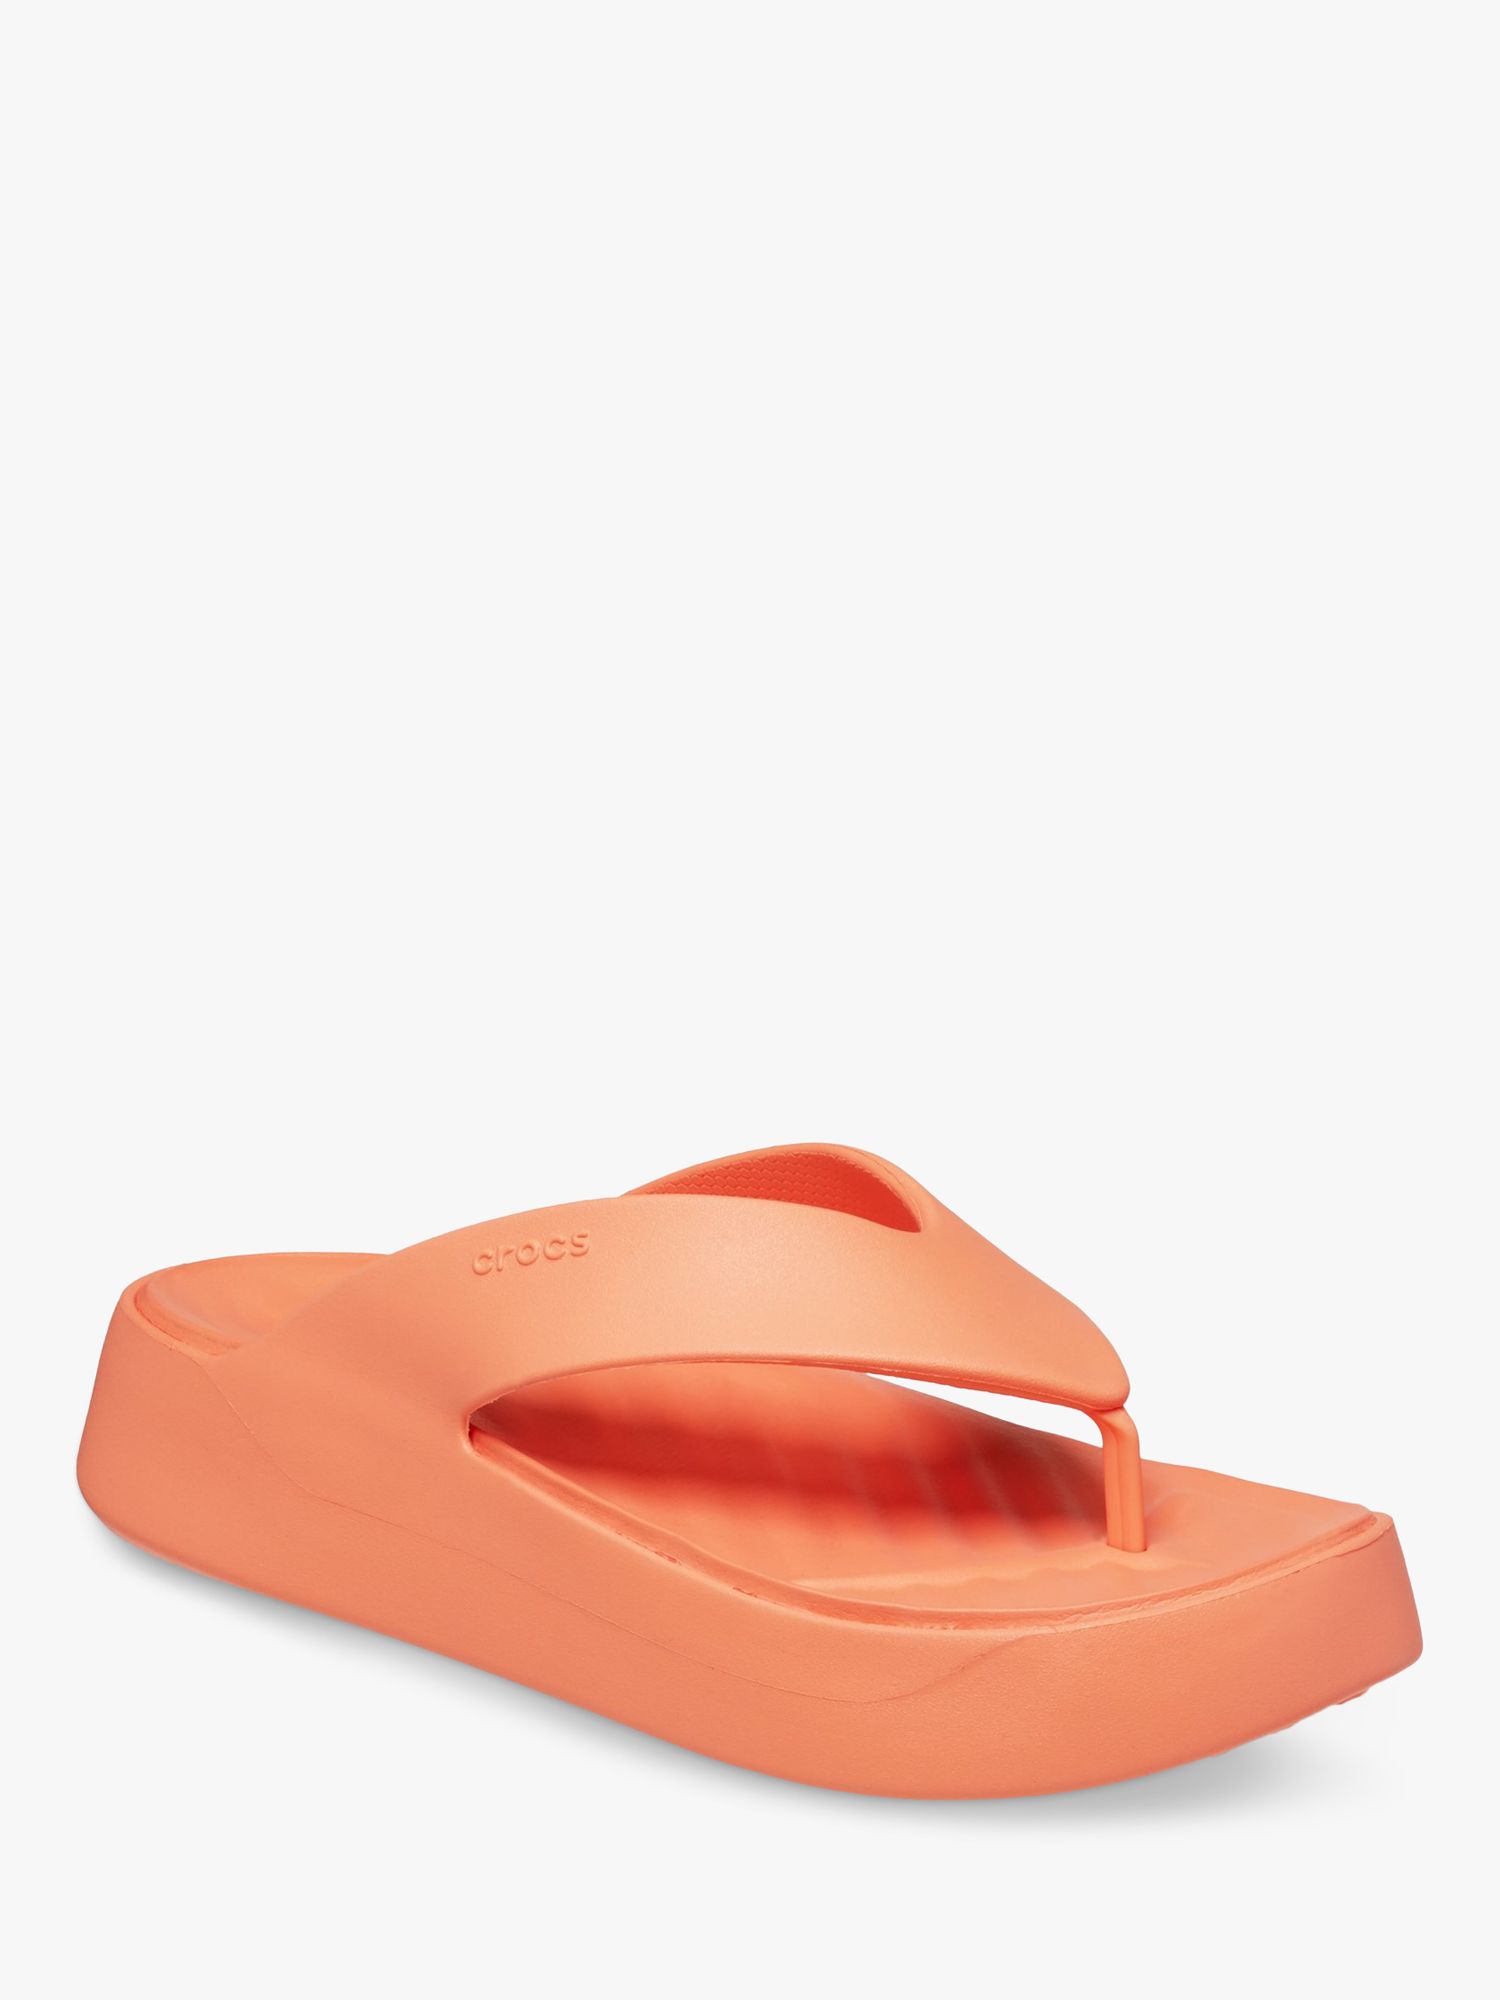 Crocs Getaway Platform Flip Flops, Light Peach, 4